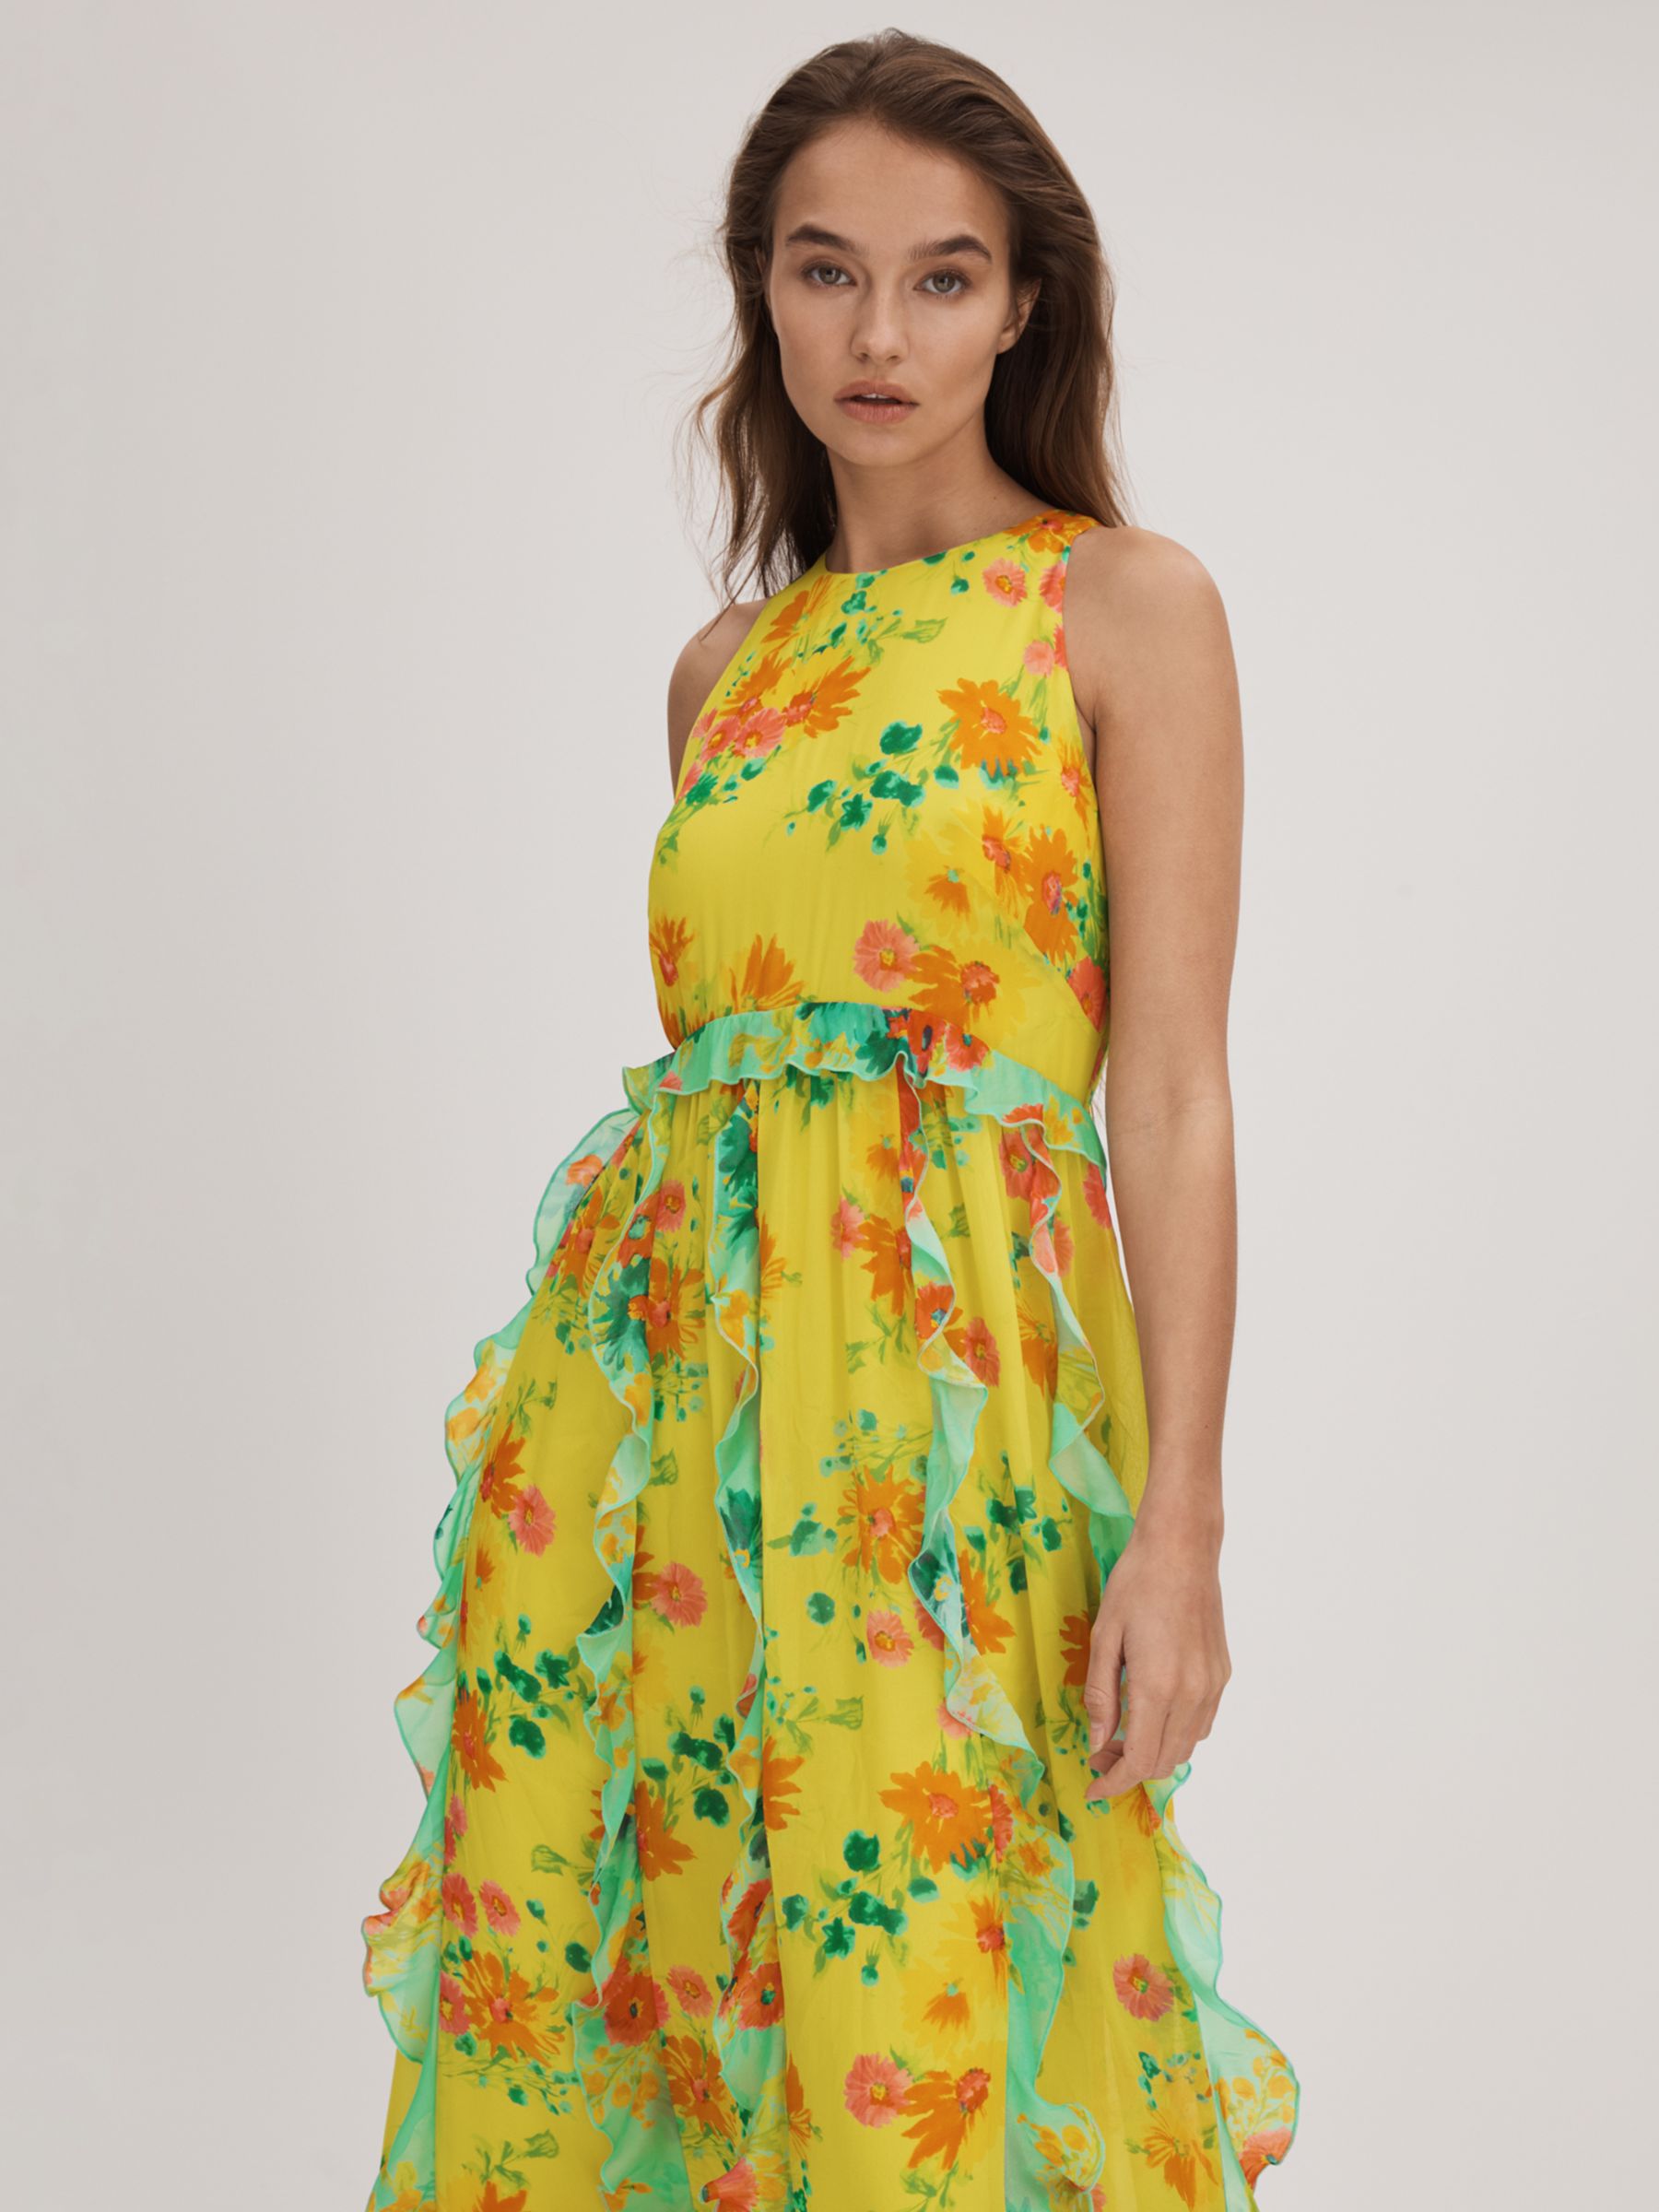 FLORERE Contrast Ruffle Midi Dress, Lime/Multi, 12